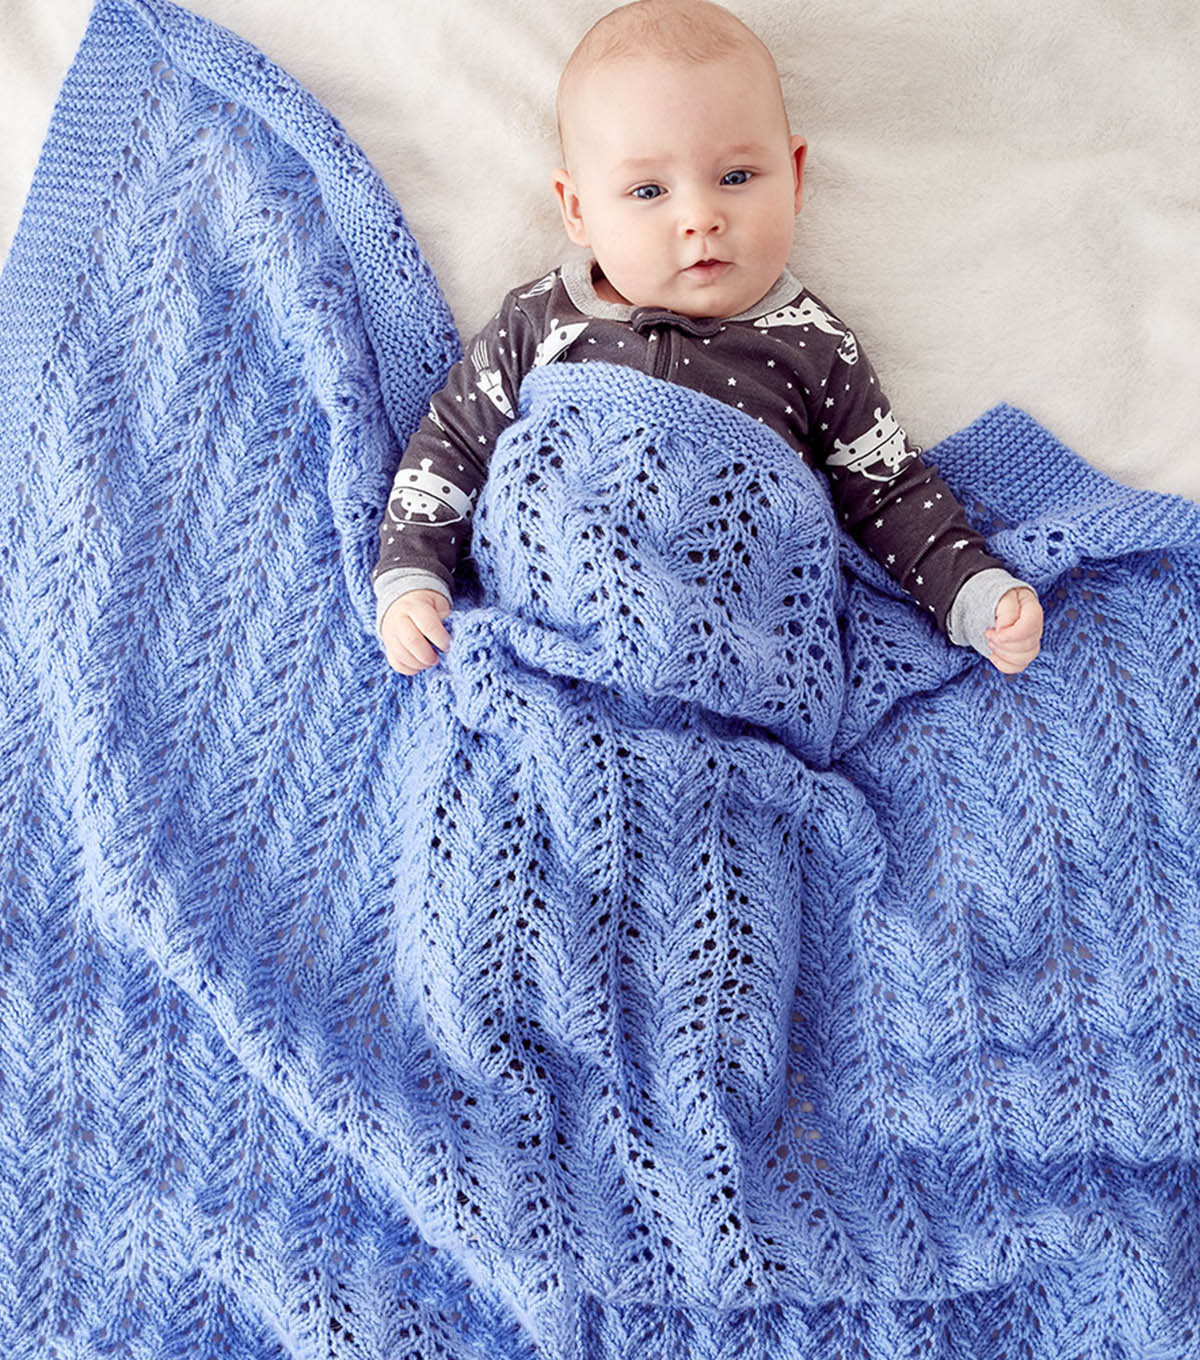 Make A Lacy Knit Baby Blanket | JOANN